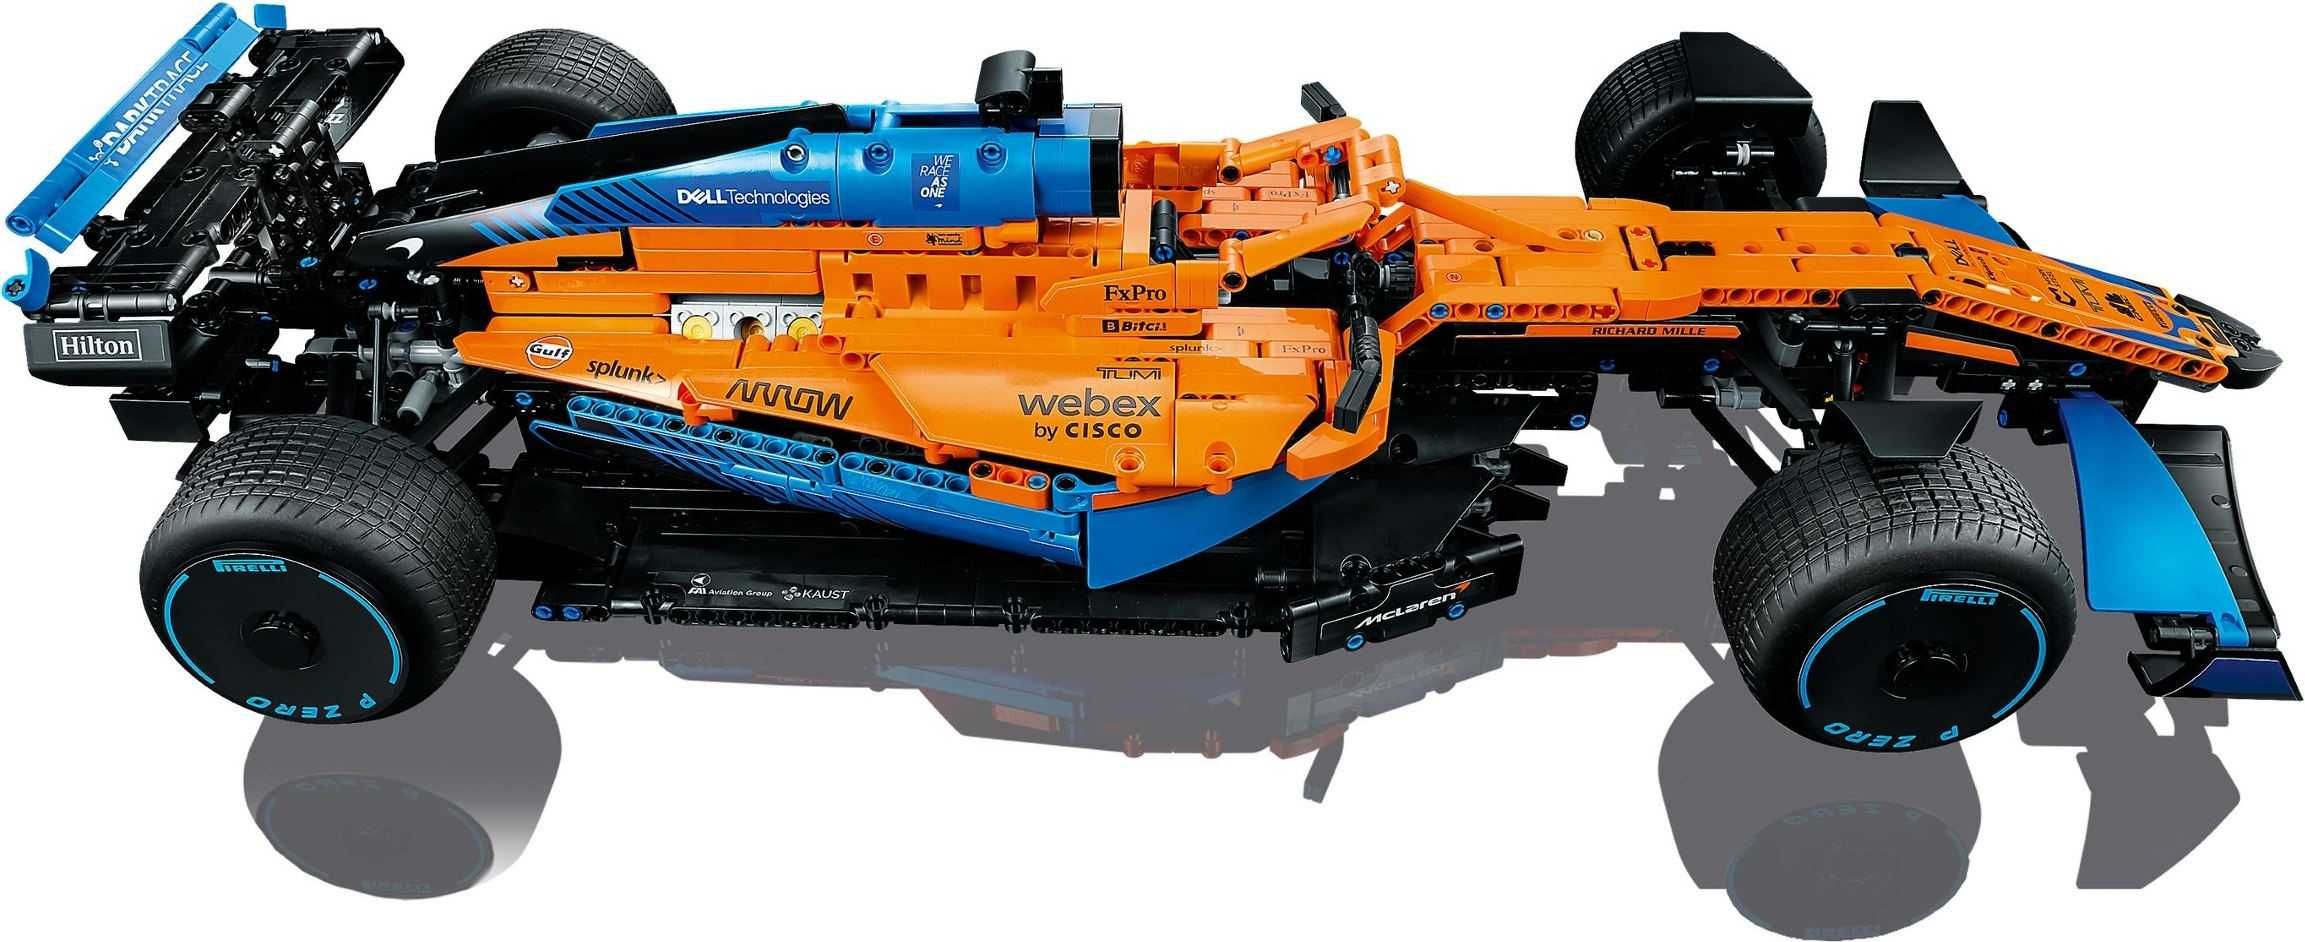 Lego 42141 - Samochód McLaren Formula 1™
Technic oryginał Nowy